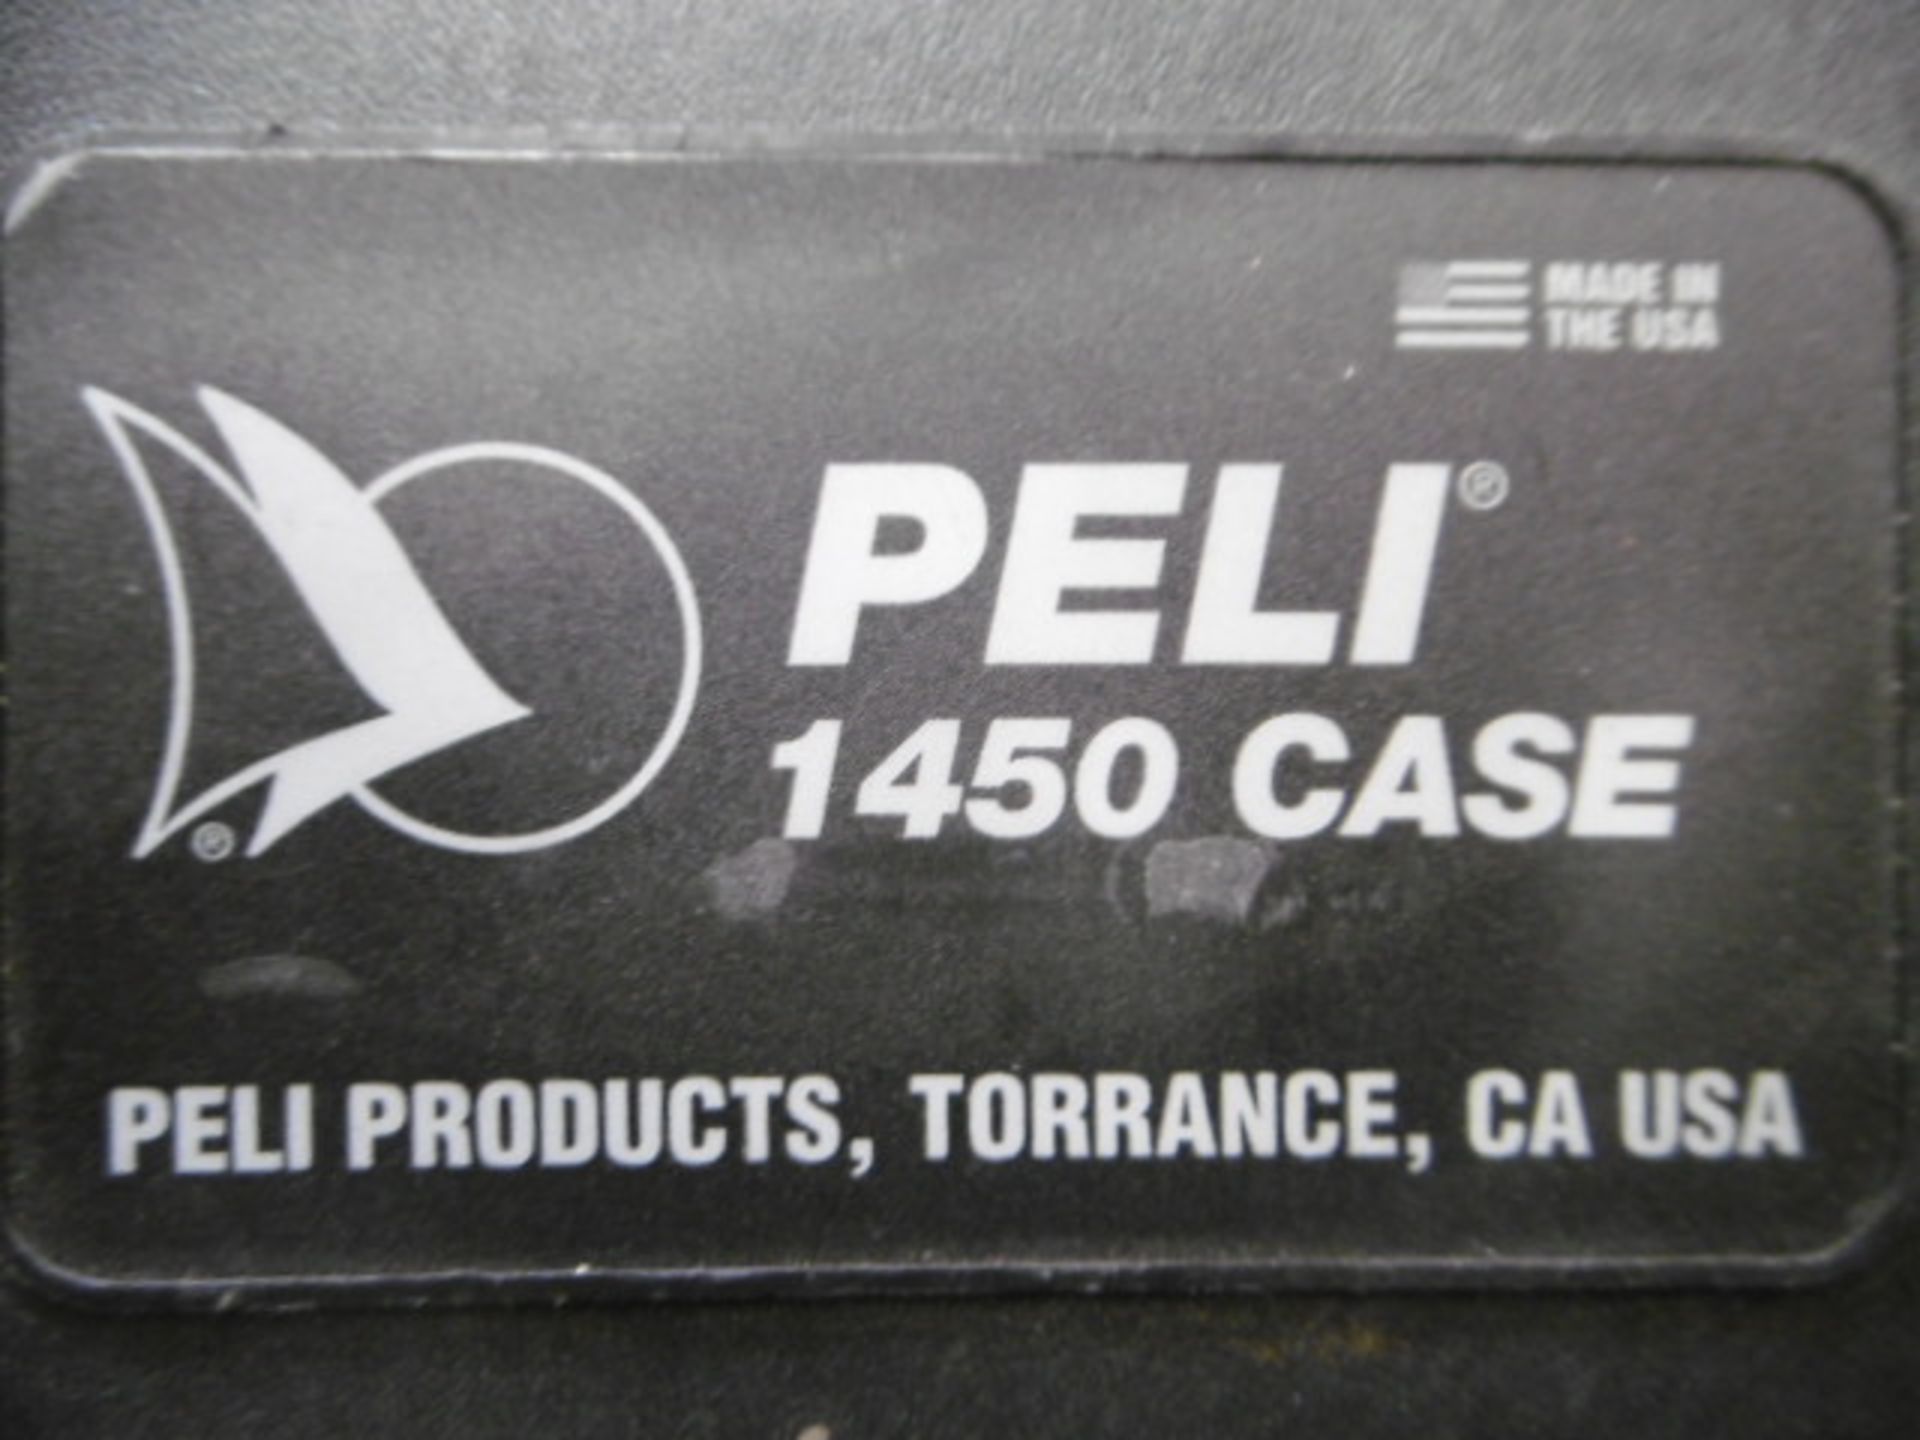 Radio Communication System in Secure Peli Case - Image 12 of 12